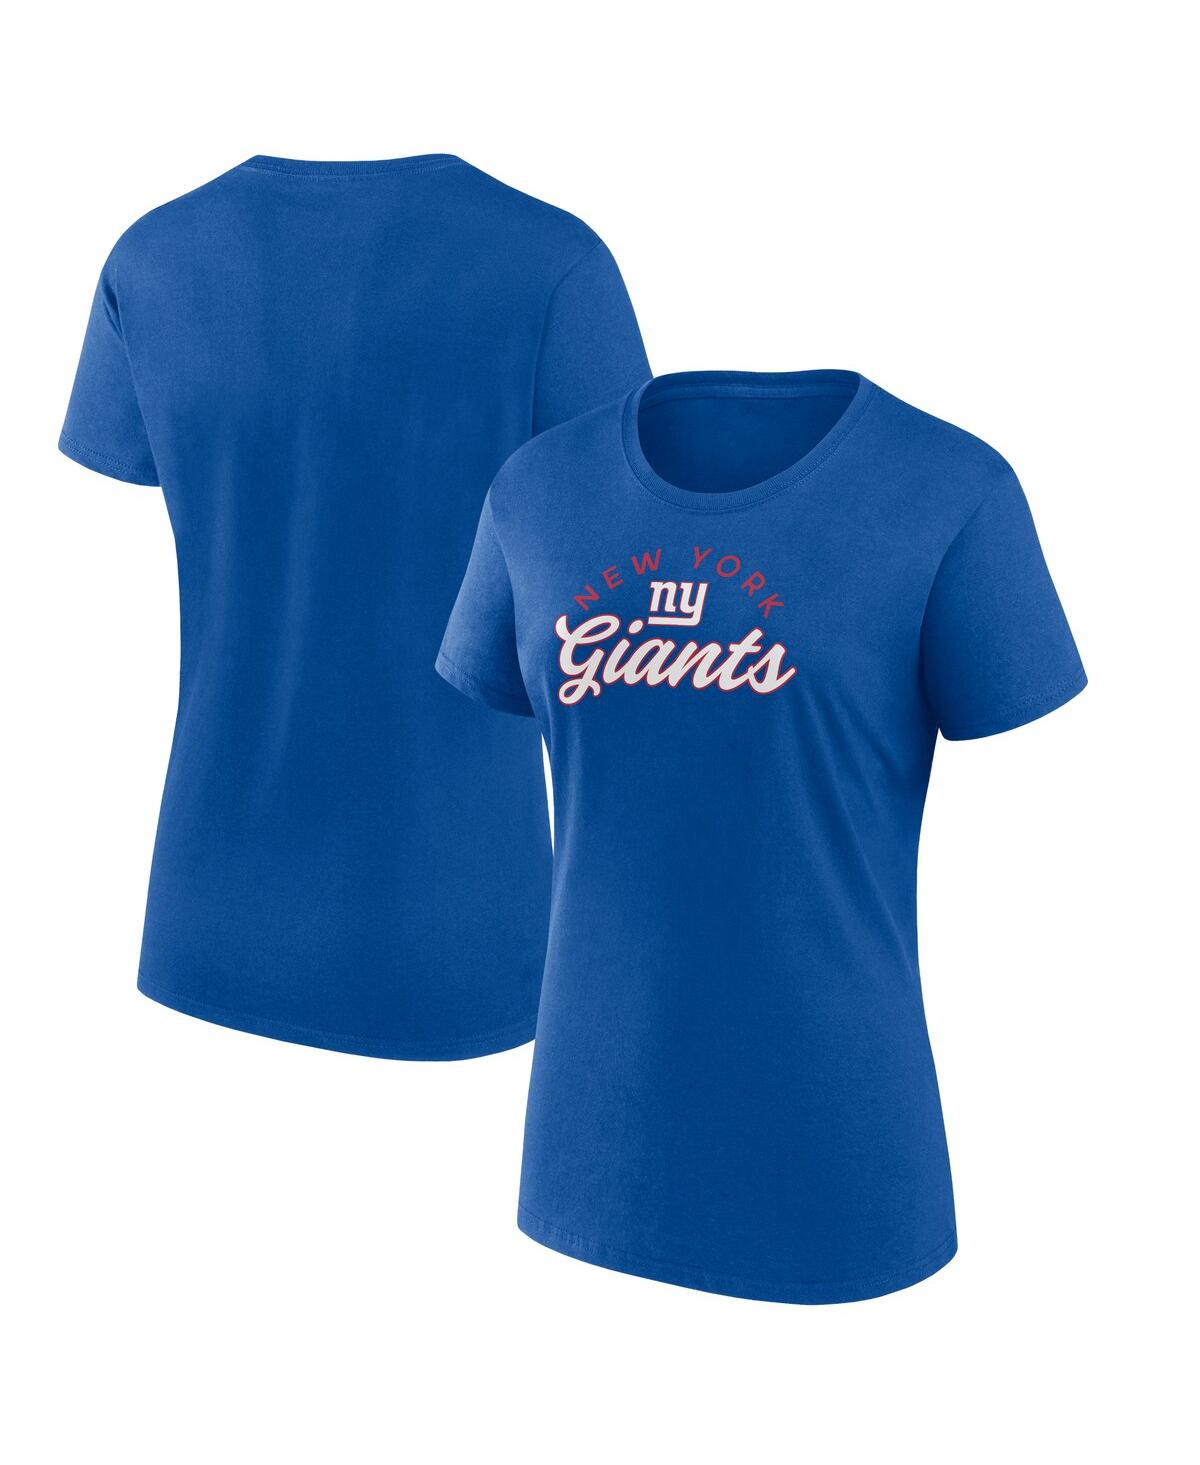 Fanatics Women's  Royal New York Giants Primary Component T-shirt